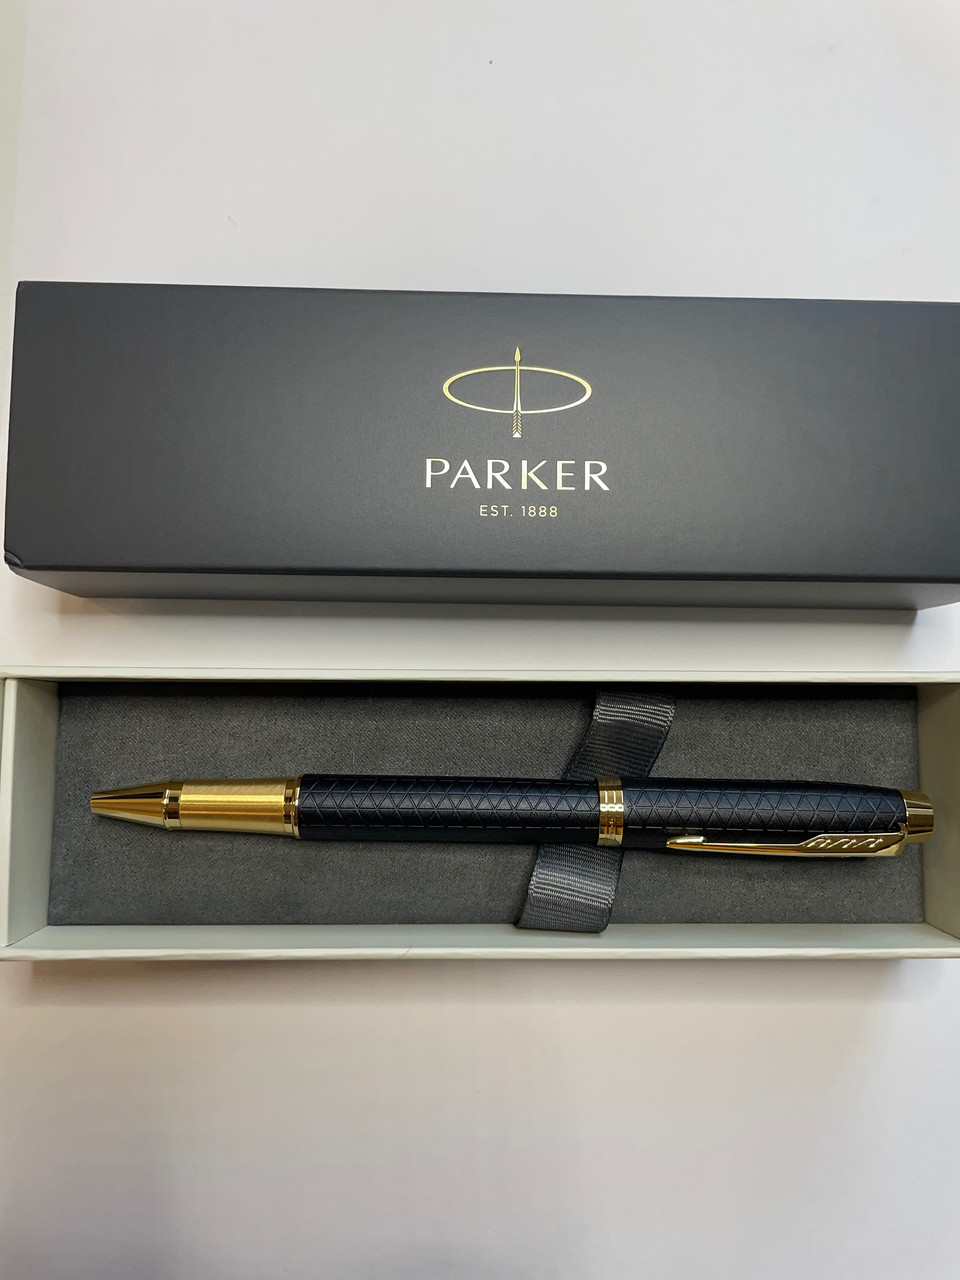 Ручка Parker 24022 IM Premium black (RB ролер) позолота